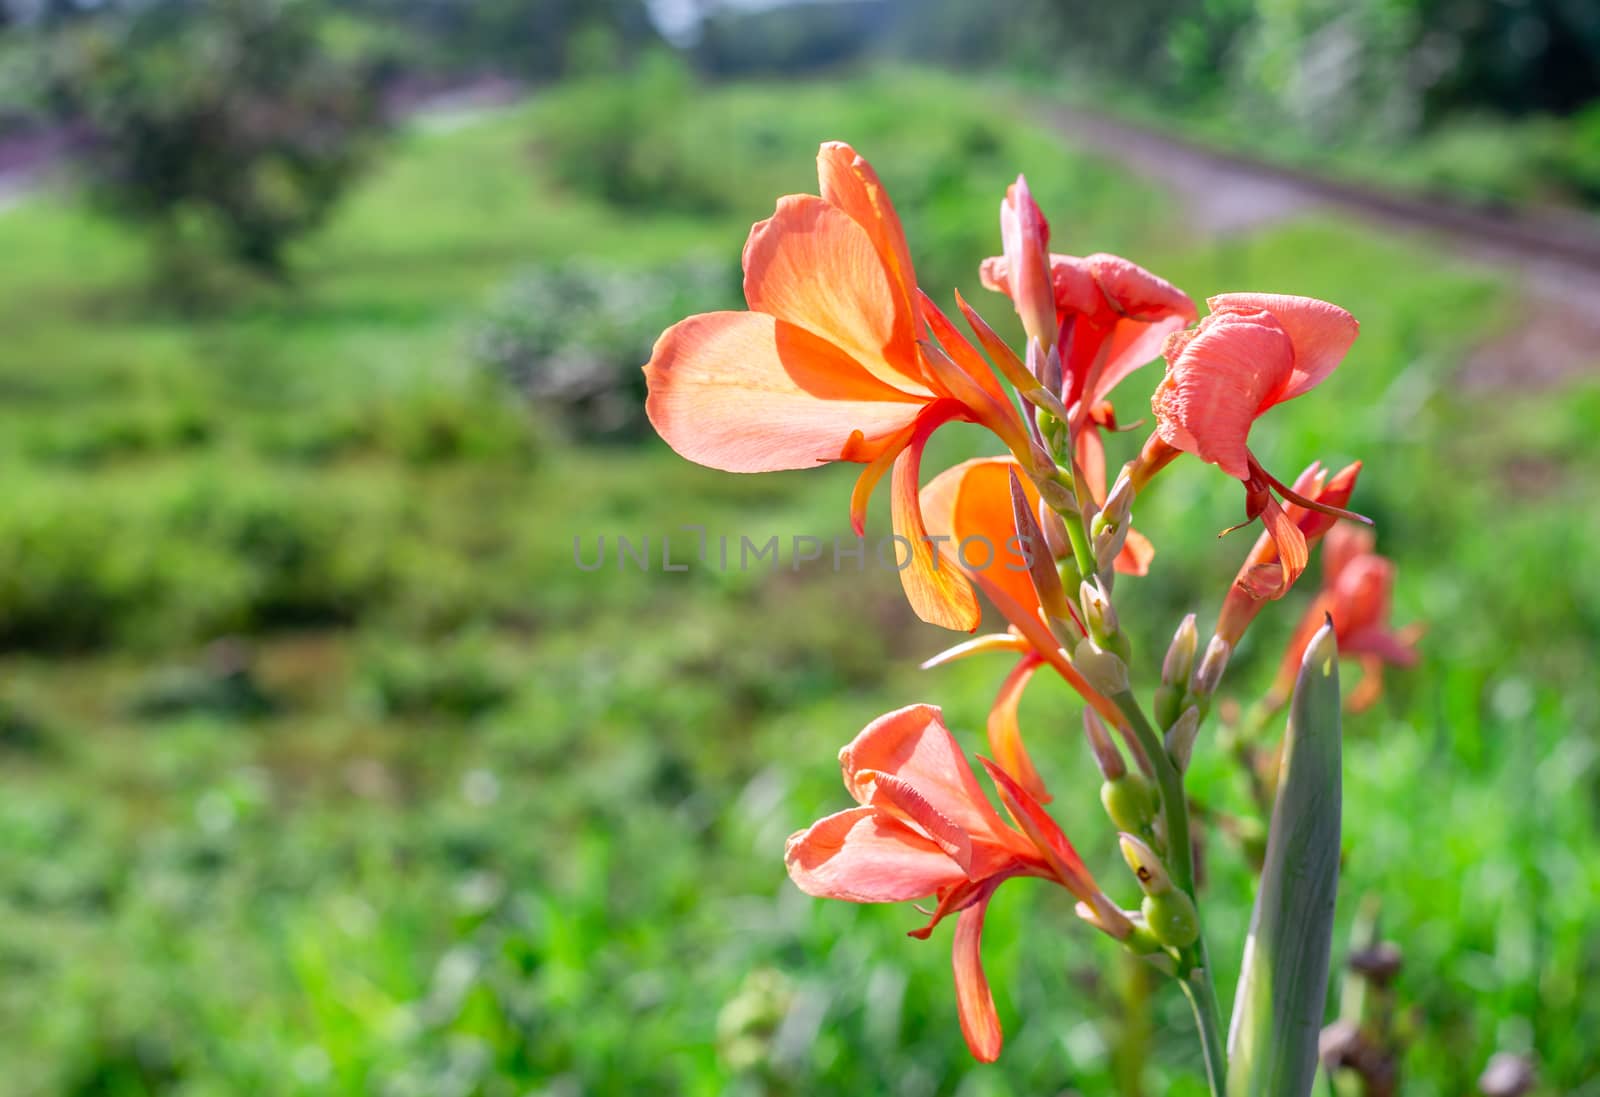 Lilium bulbiferum or orange lily flower on blurred green nature background in sunlight